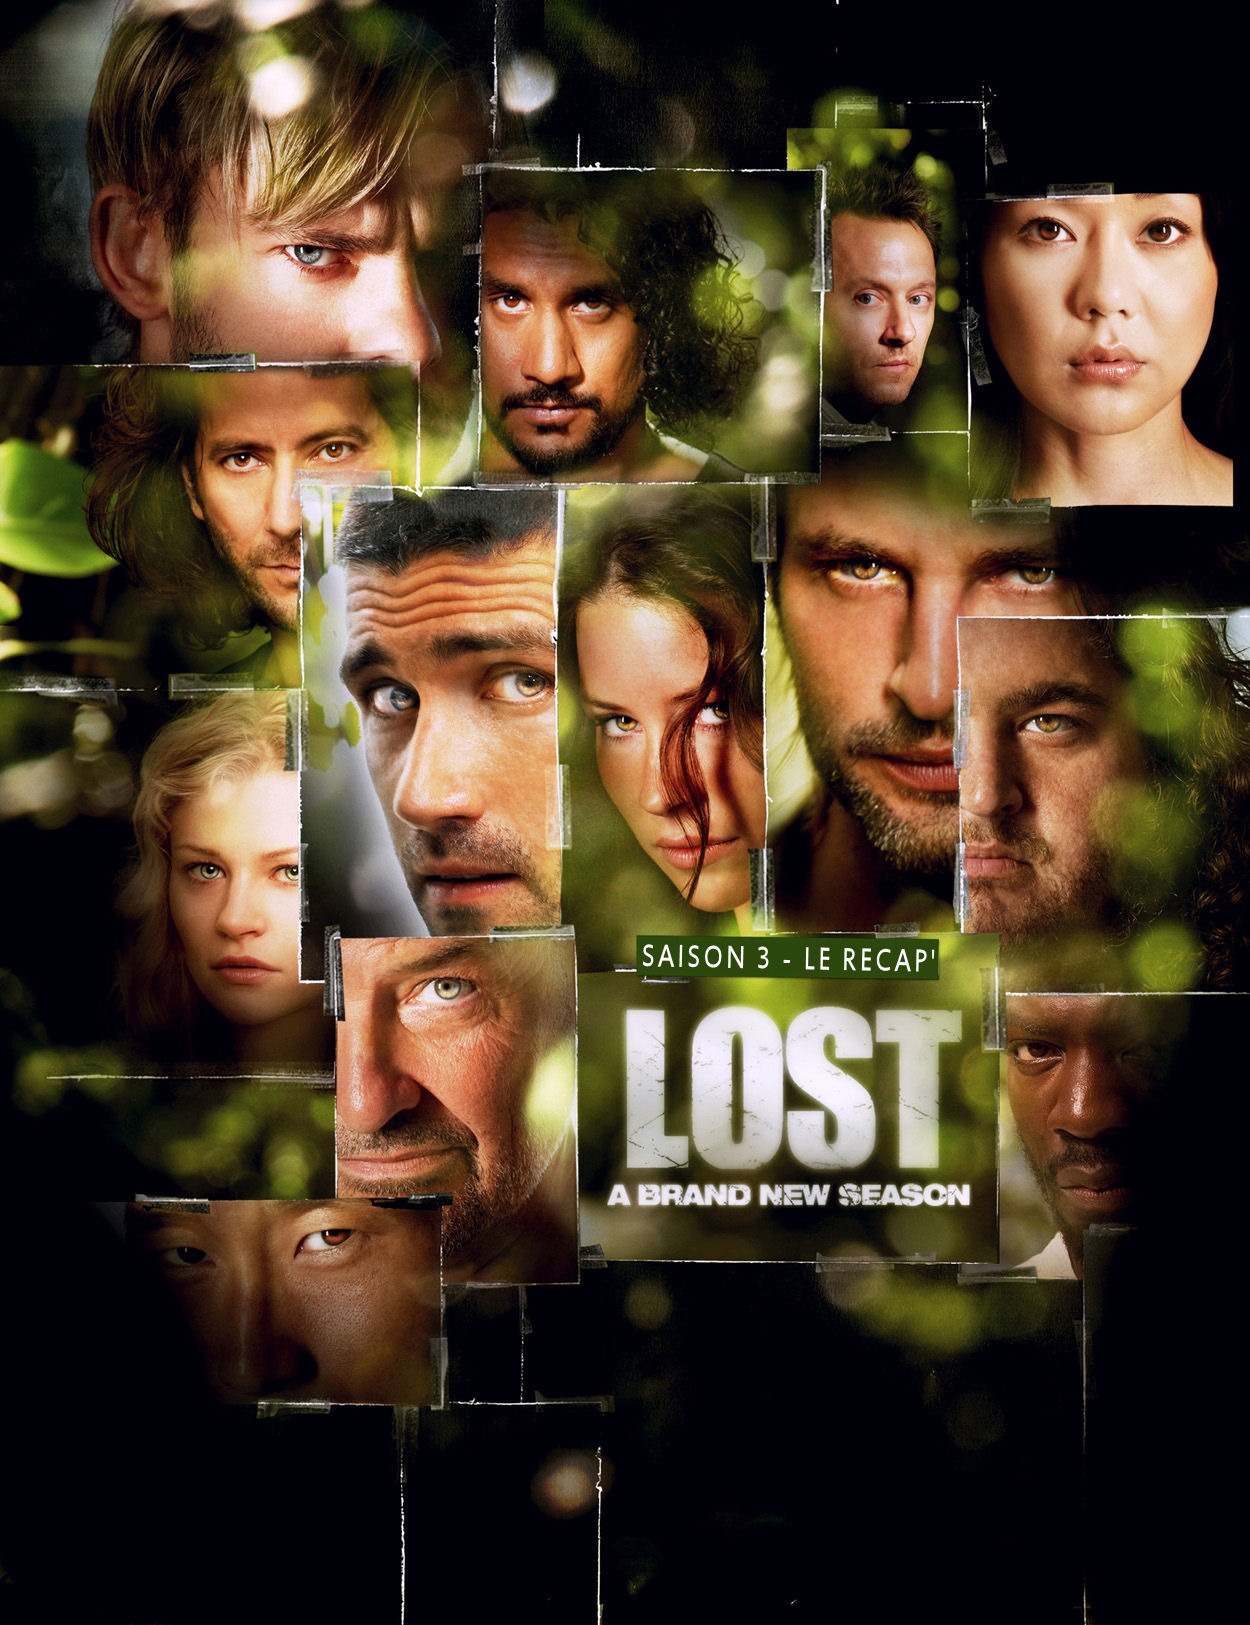 Lost - LOST - saison 3 lostseason3